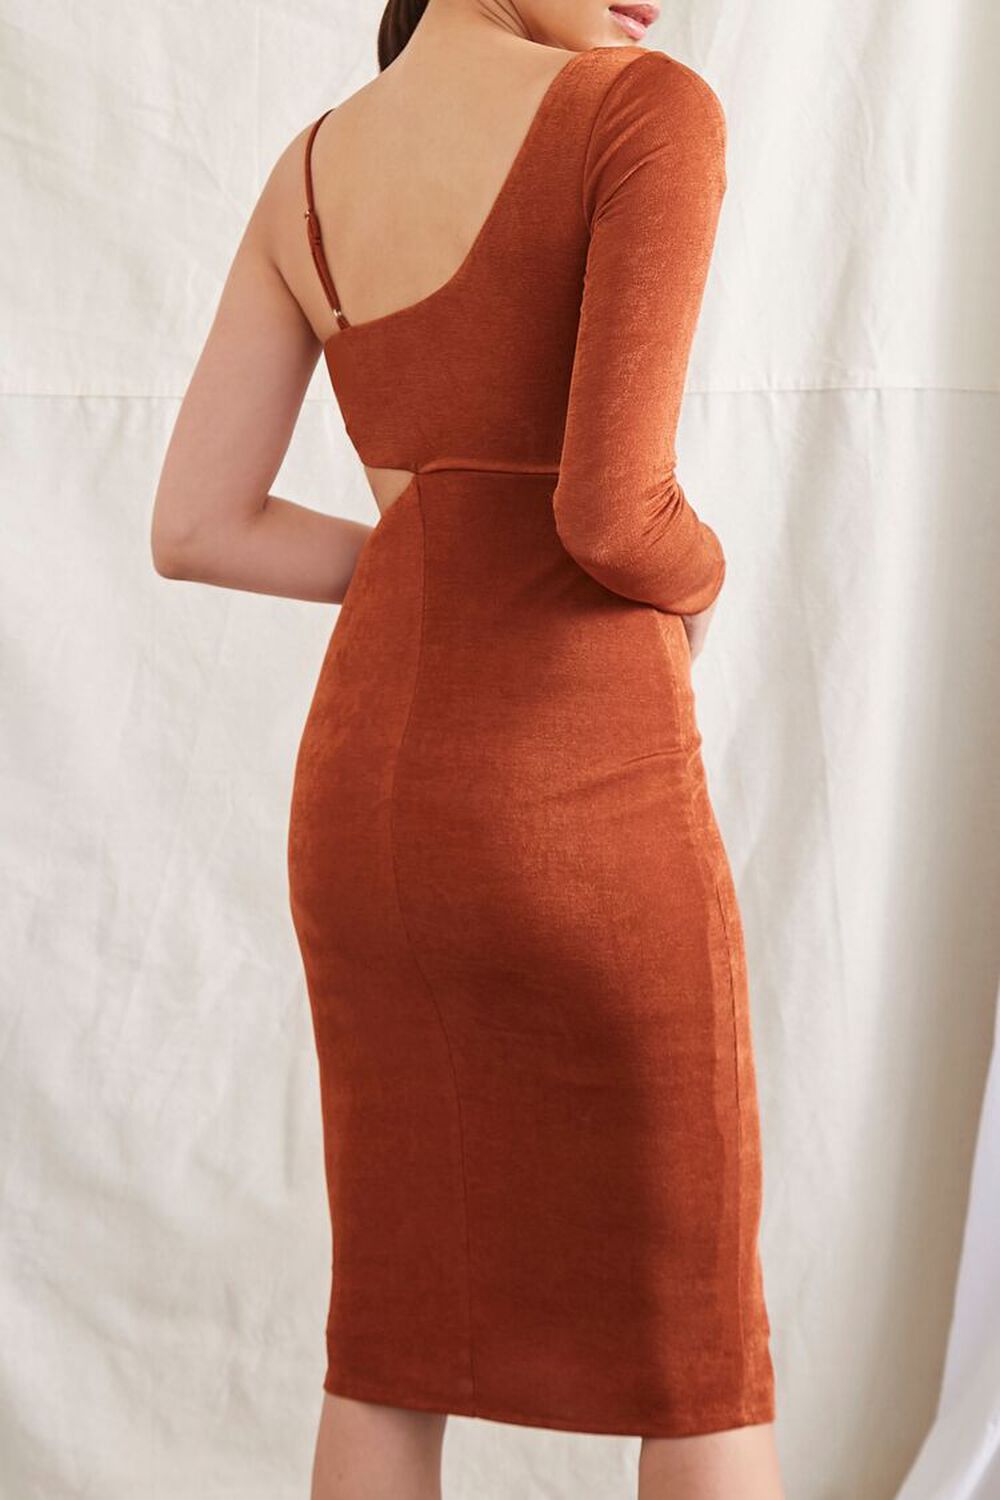 BROWN One-Sleeve Cutout Mini Dress, image 3